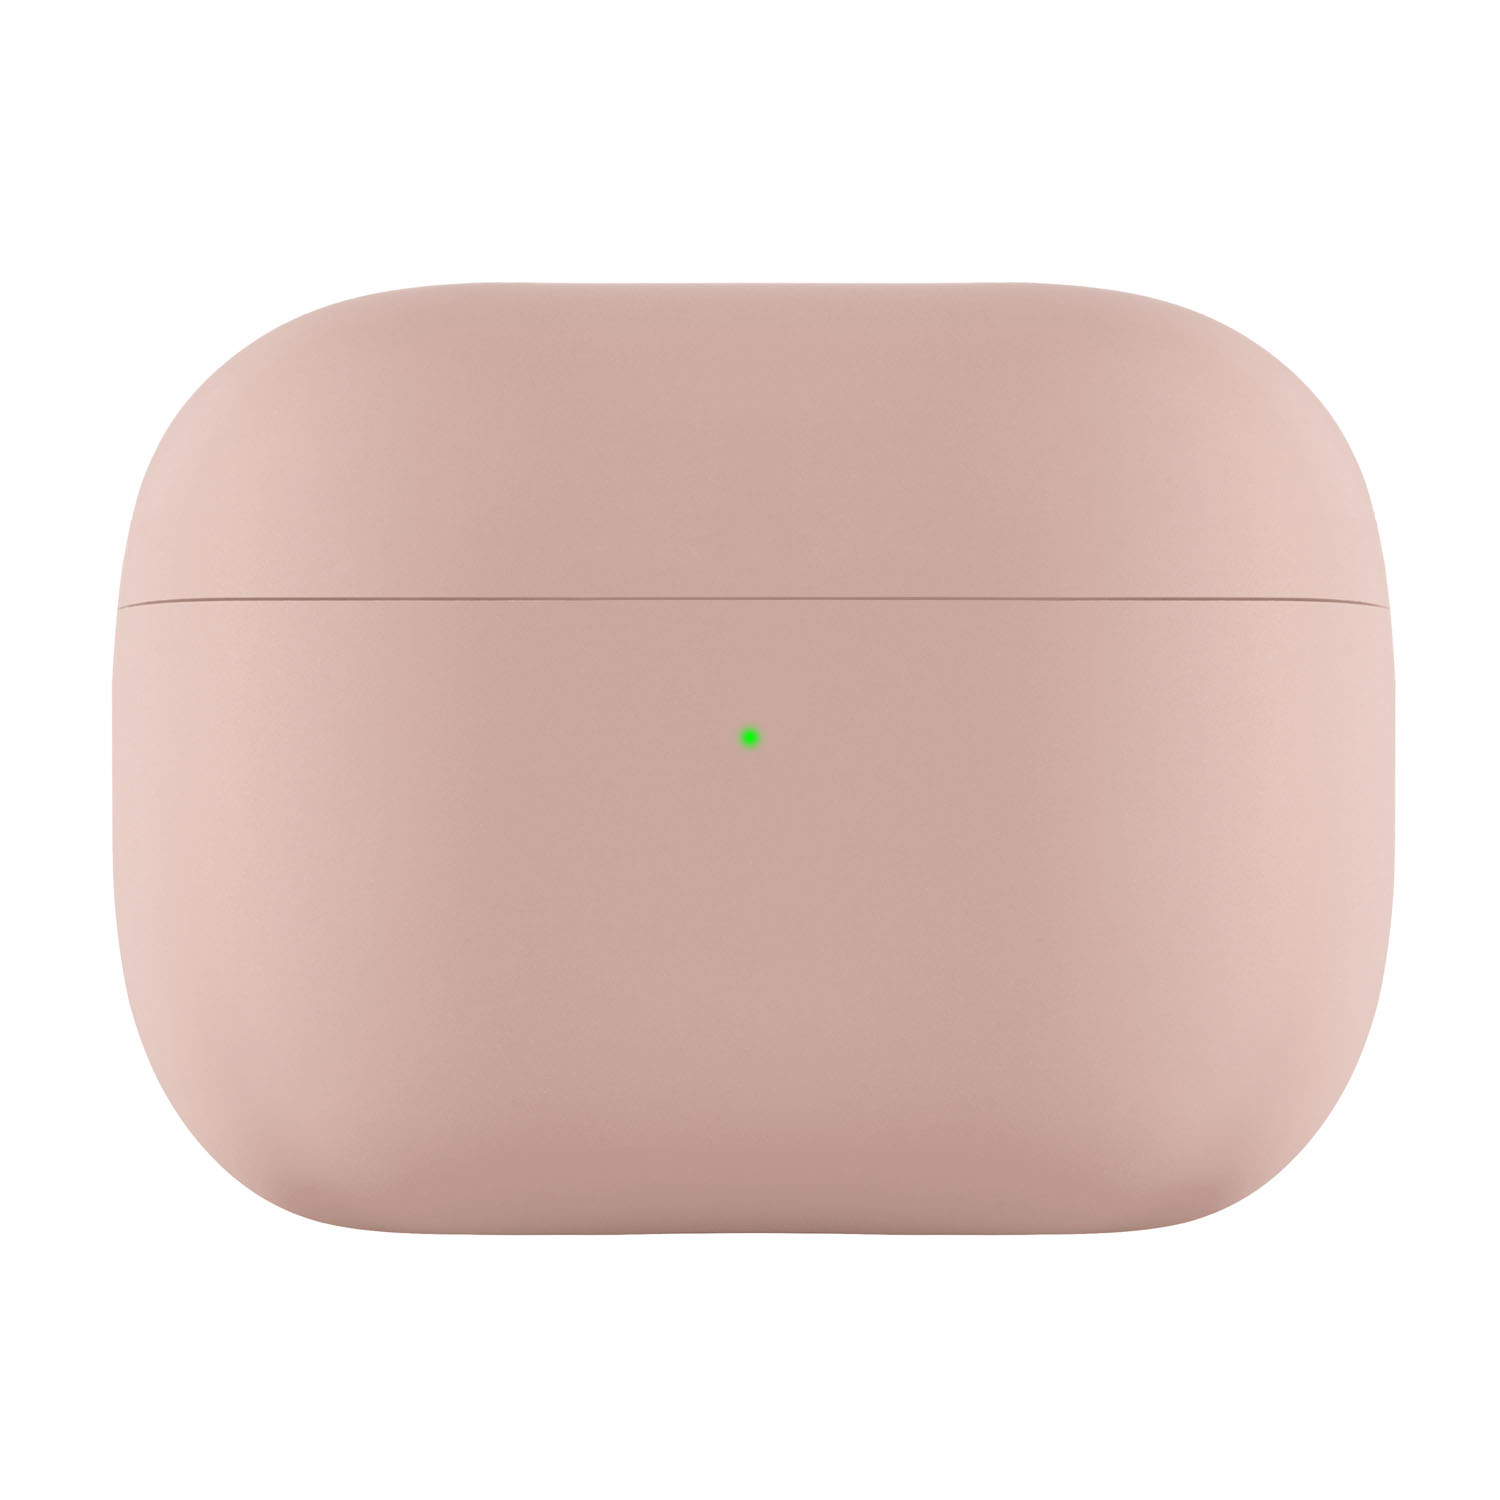 Защитный чехол Airpods Pro Touch Pro Silicone Case, 1,5 мм усиленный, розовый